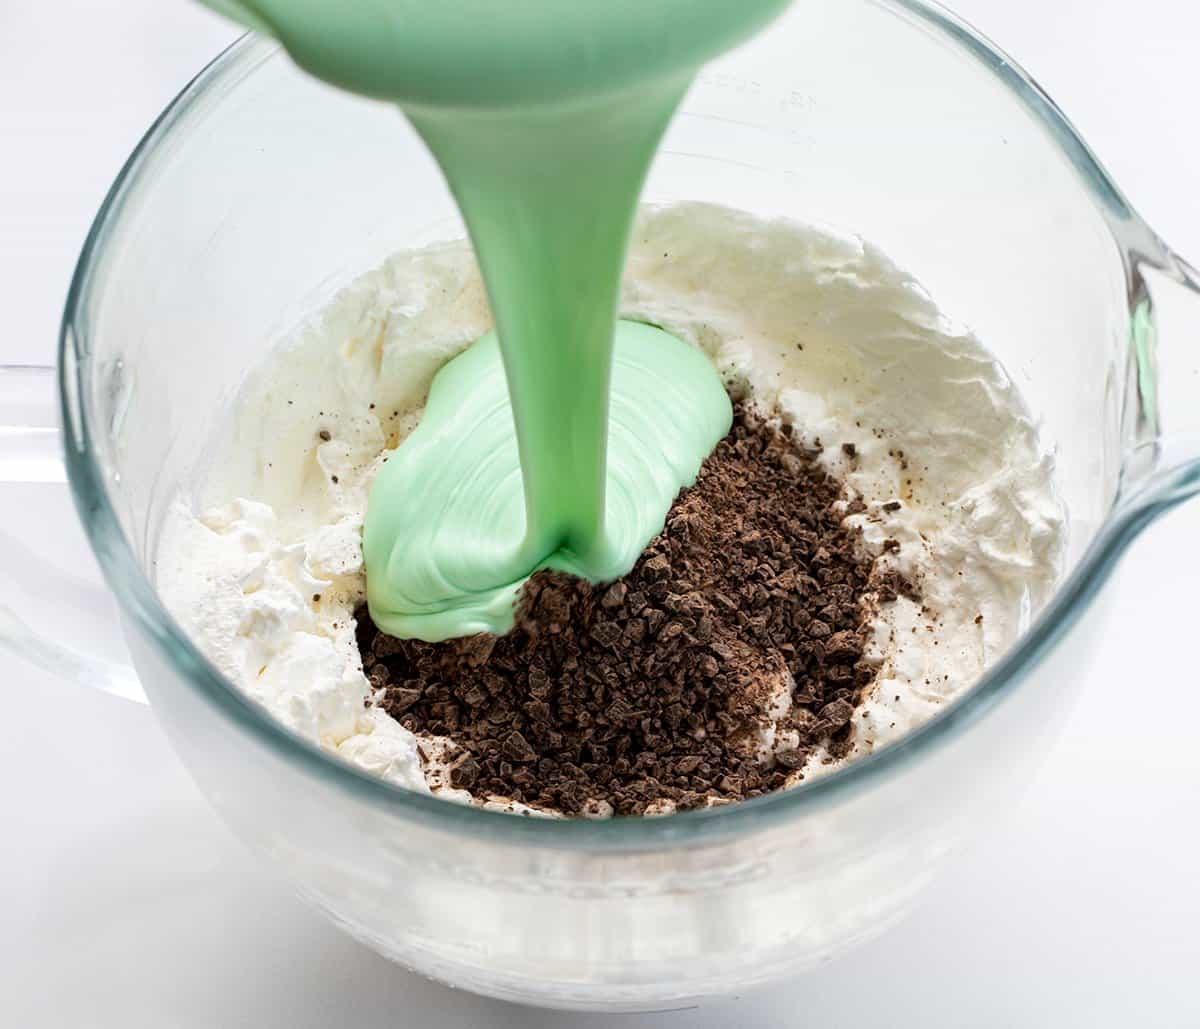 Adding sweetened condensed milk and chopped chocolate to whipped cream to make No-Churn Mint Chocolate Chip Ice Cream 